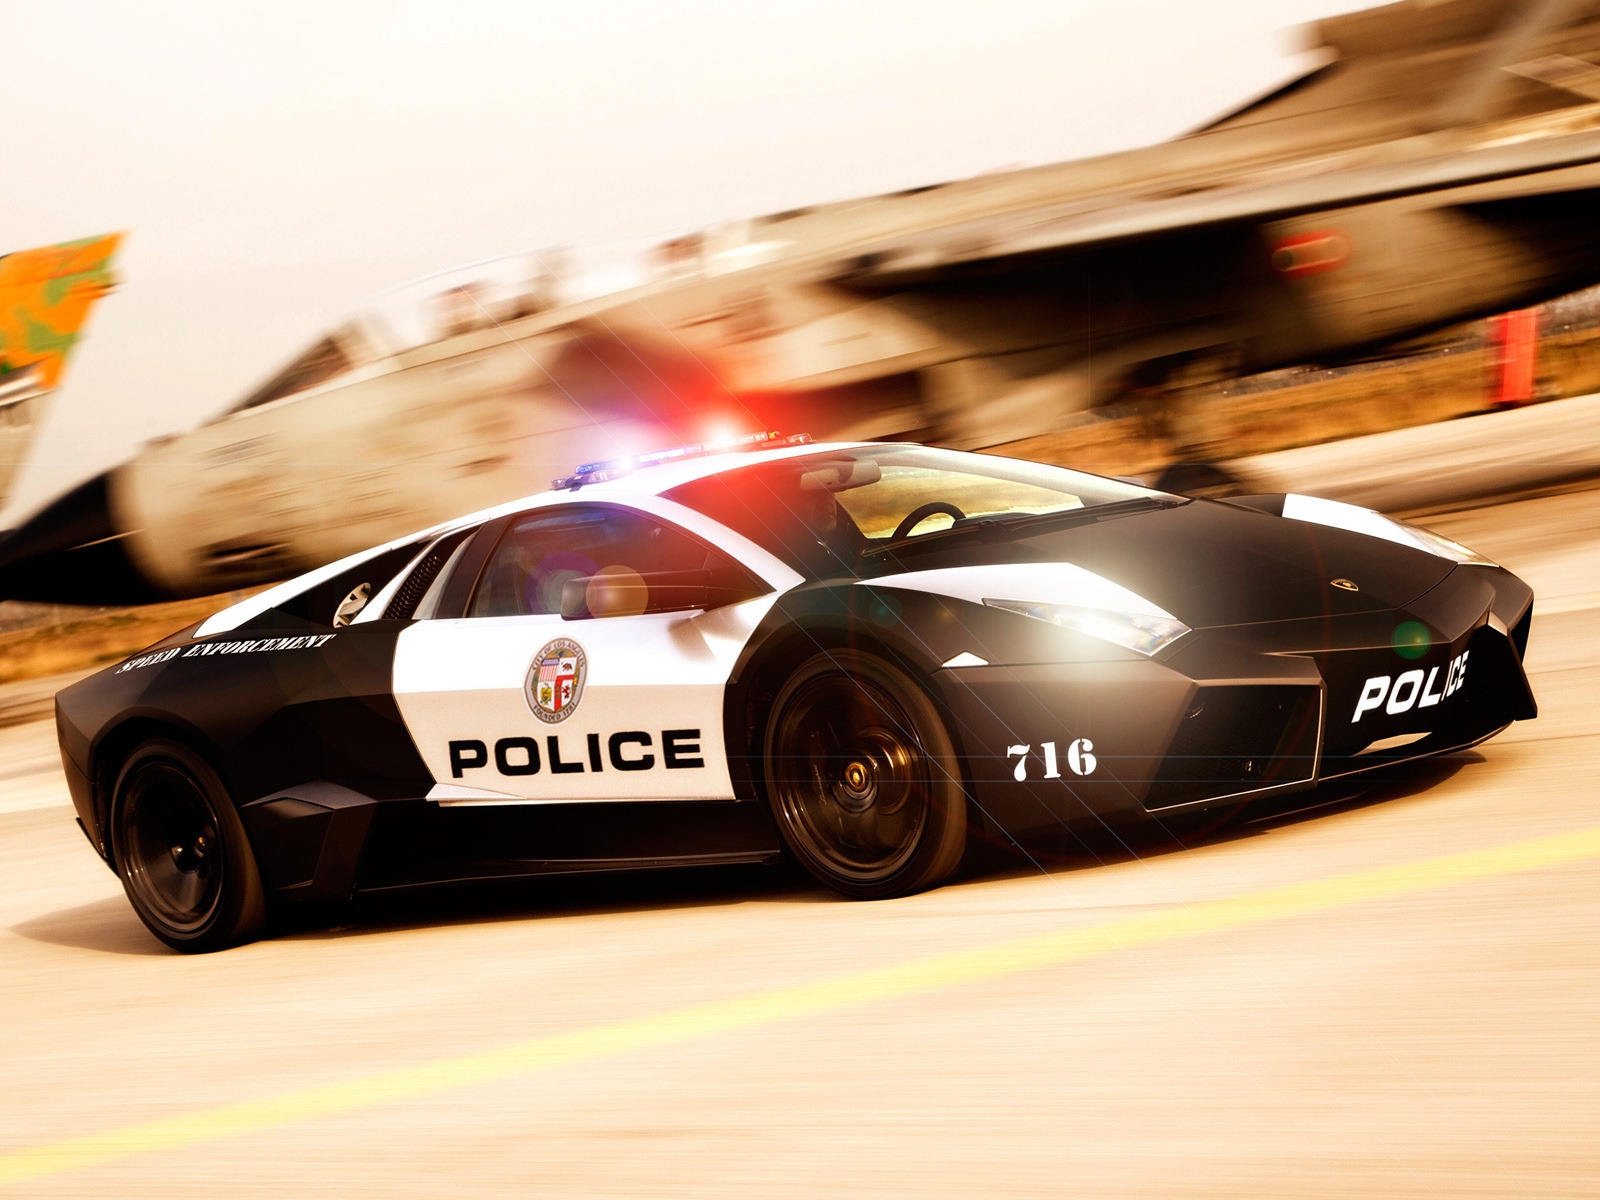 Lamborghini Police Car NFS for 1600 x 1200 resolution